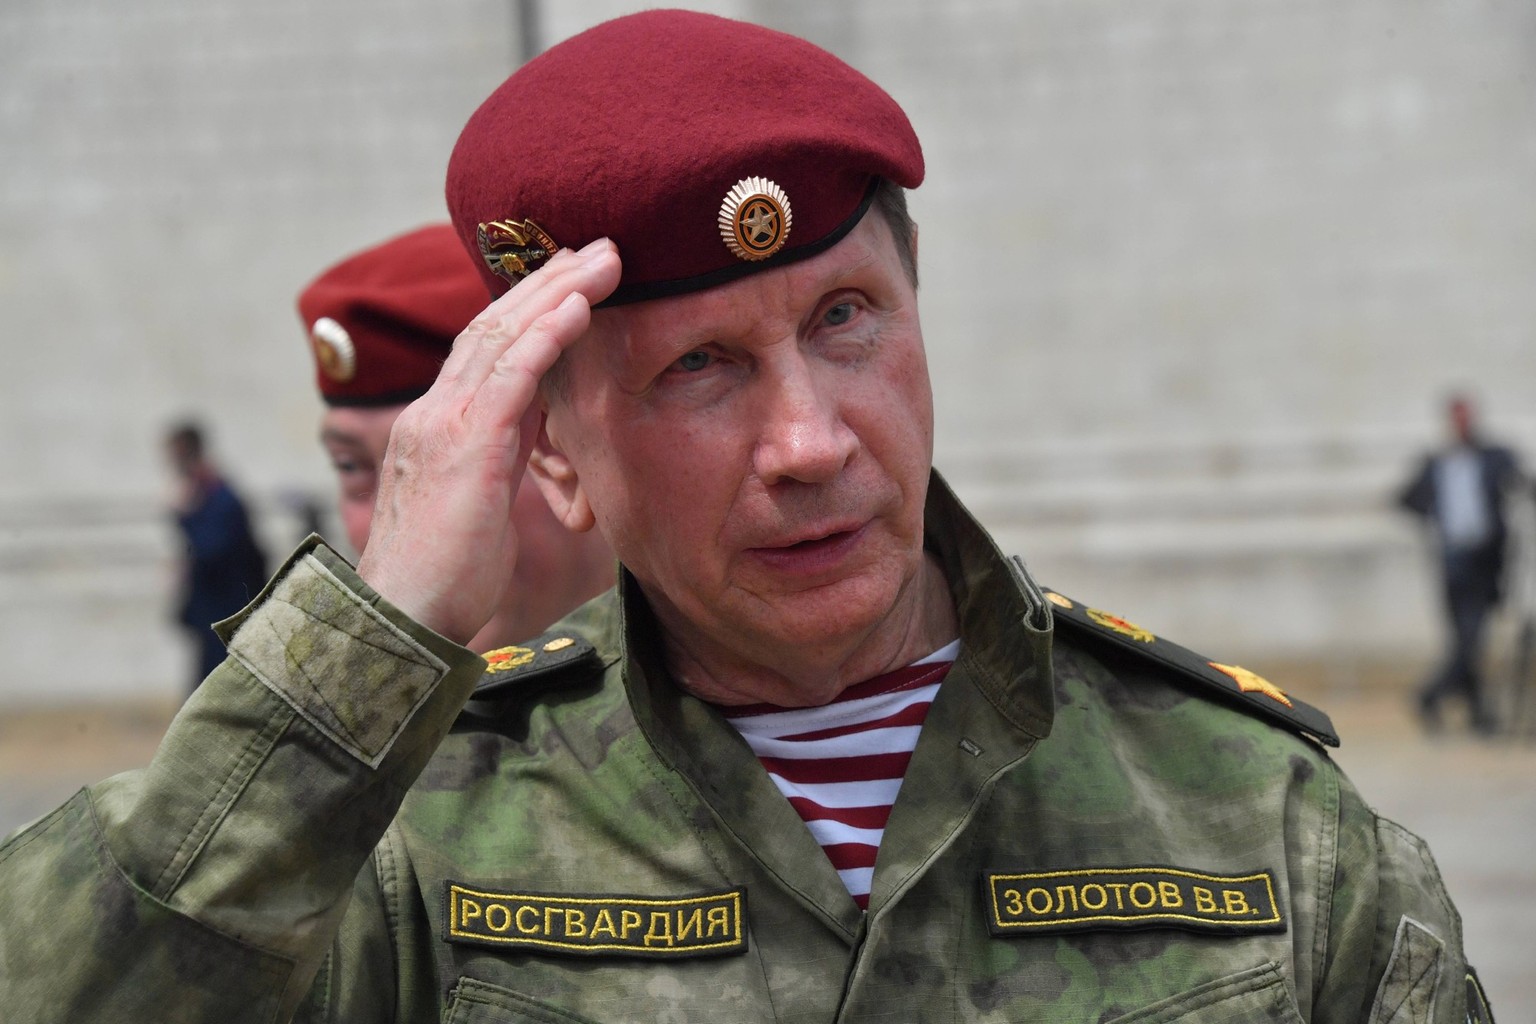 Viktor Solotov, le chef de la garde nationale russe